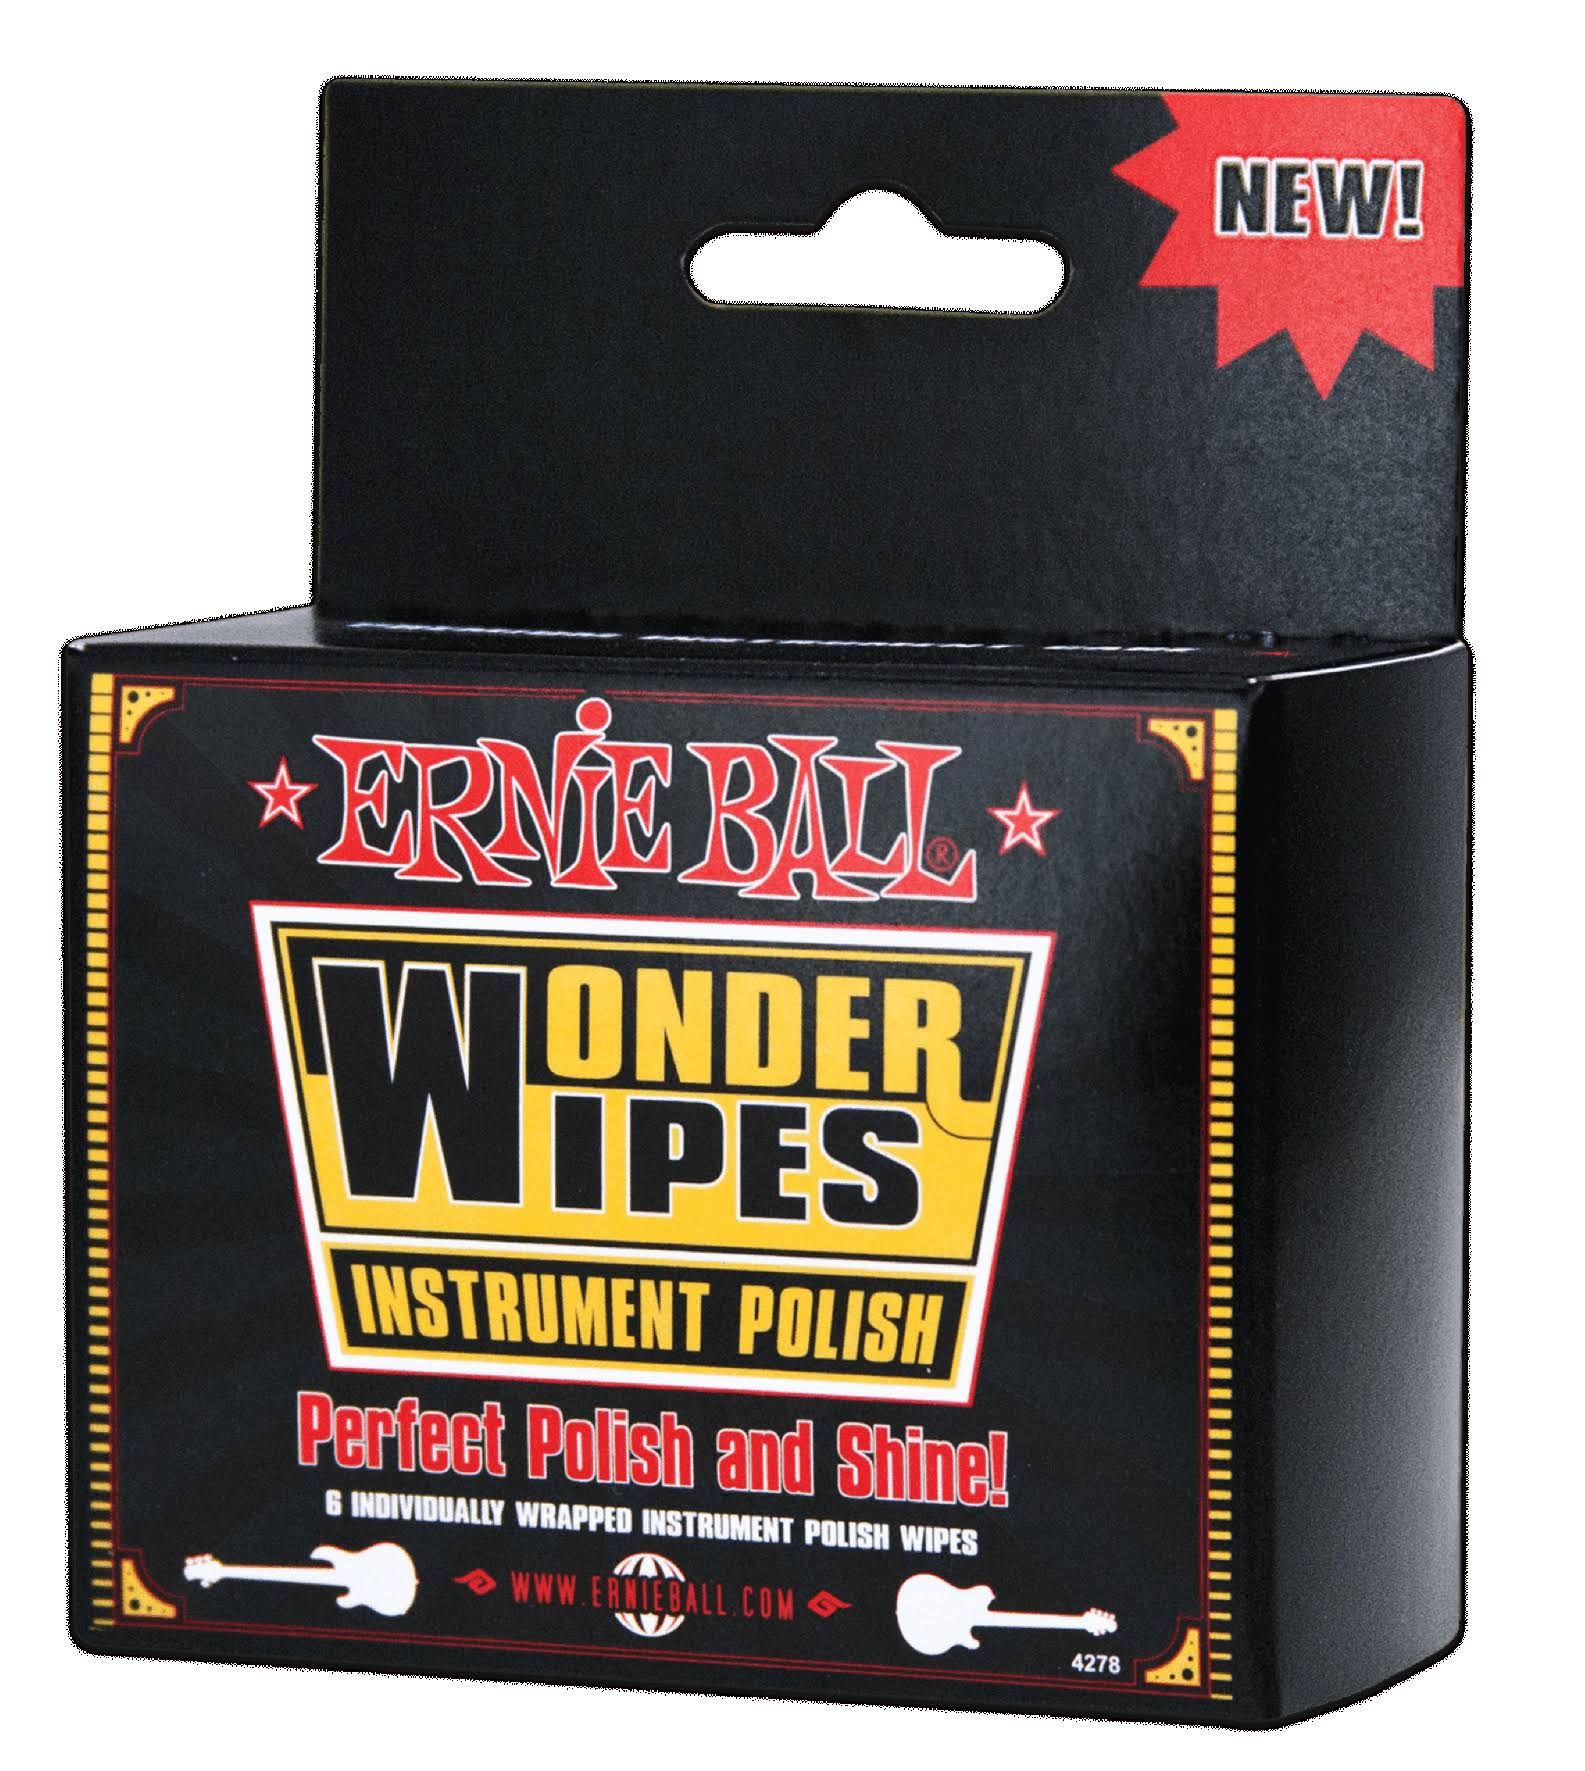 Ernie Ball Wonder Wipes Instrument Polish 6 Pack